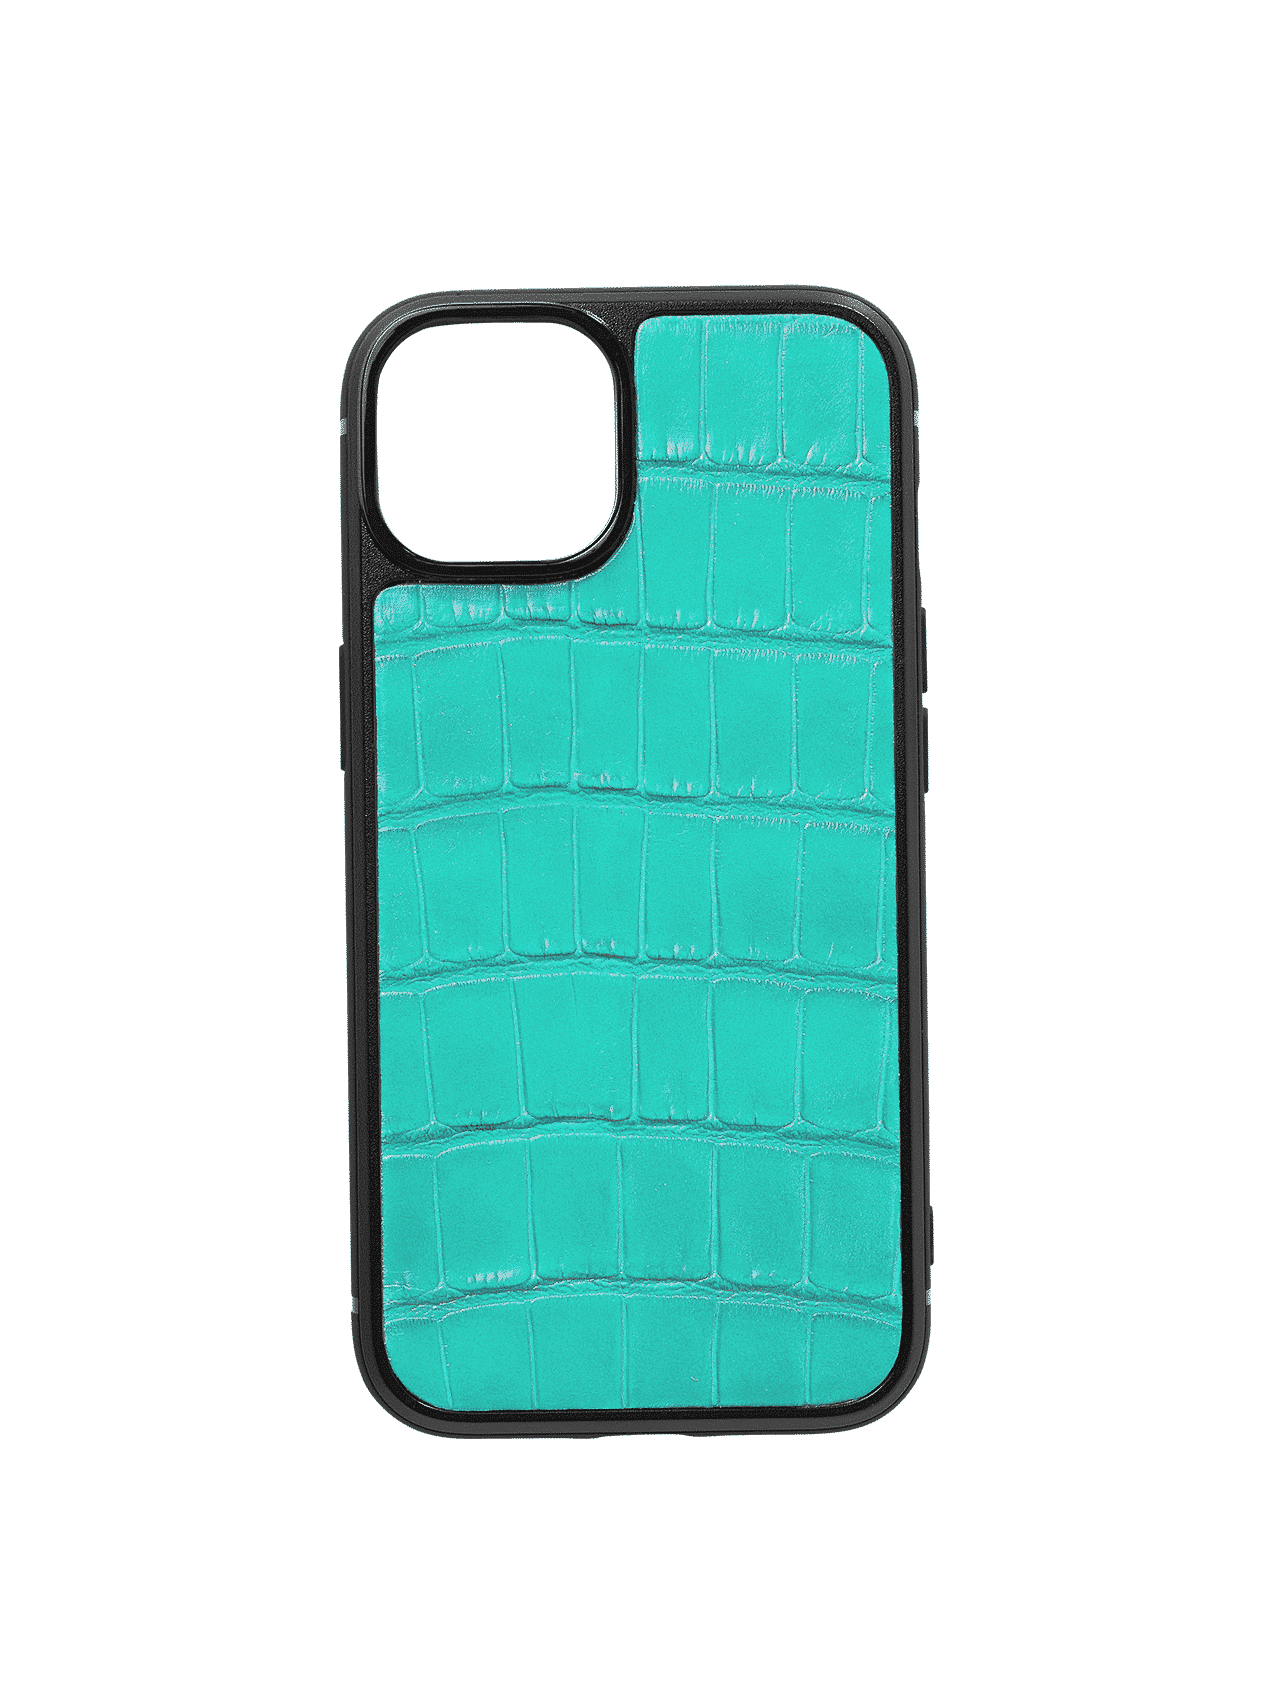 iphone case 14 leather crocodile blue